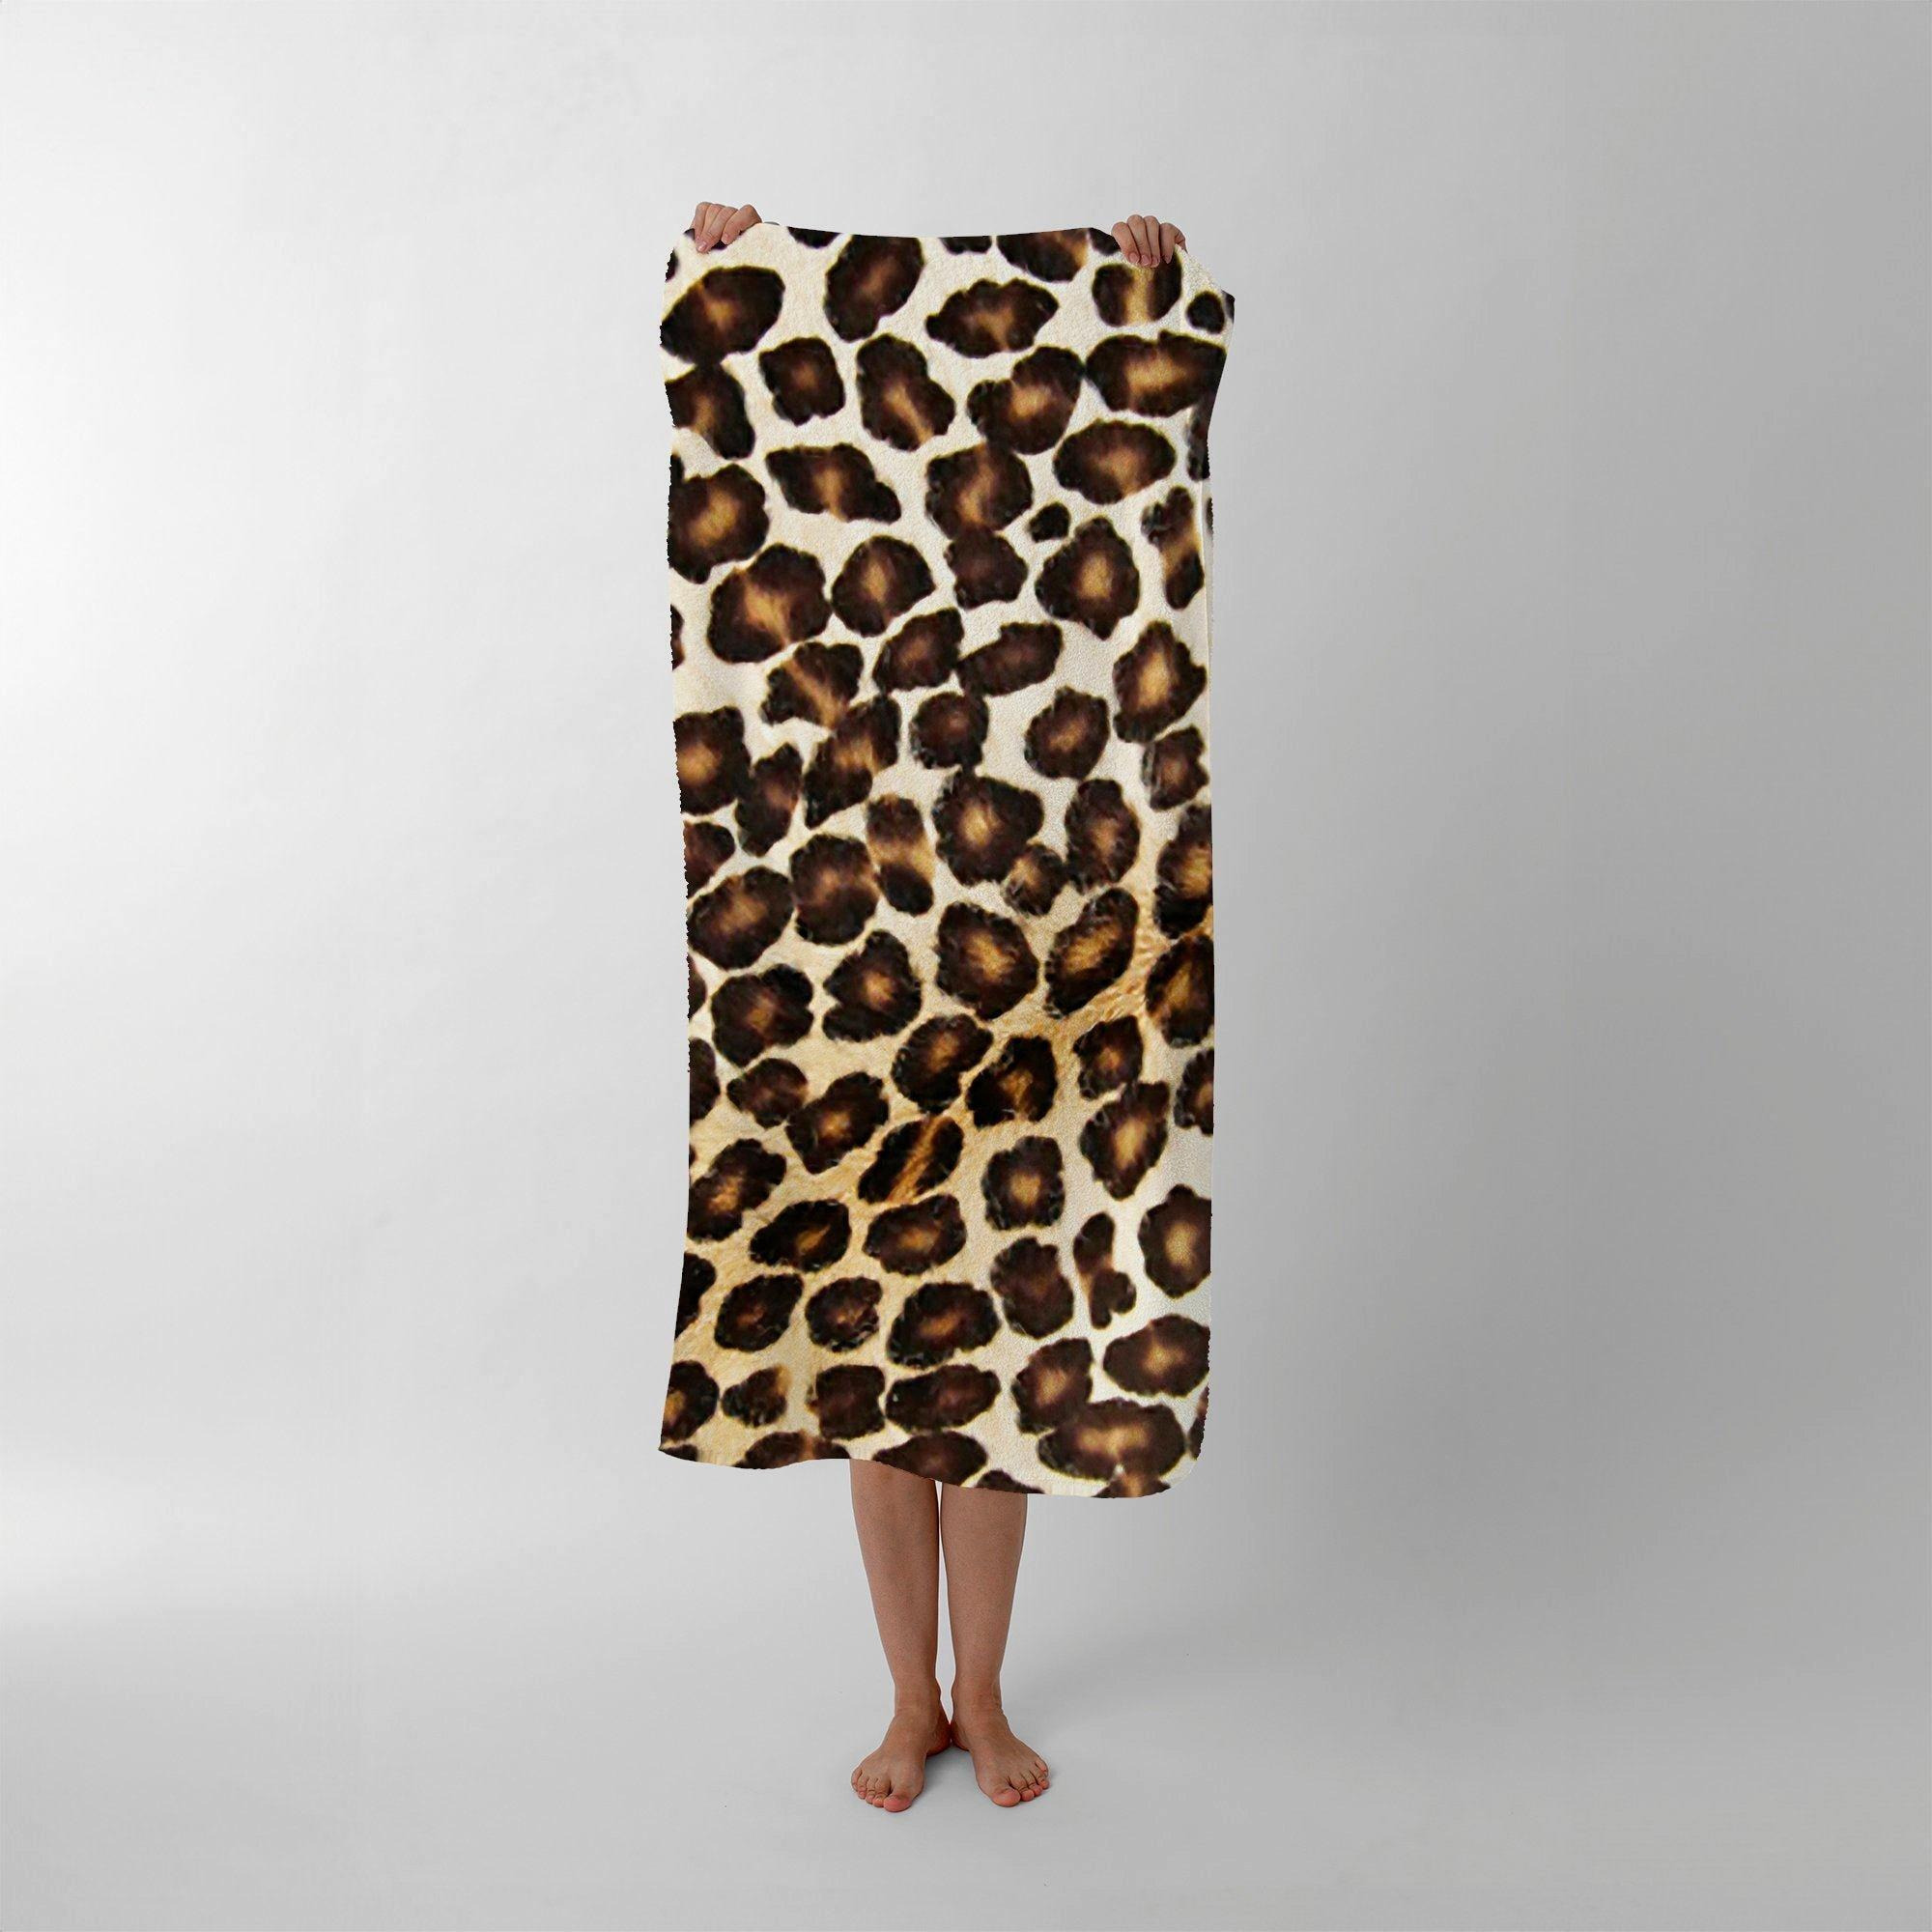 Leopard Hide Print Beach Towel - image 1